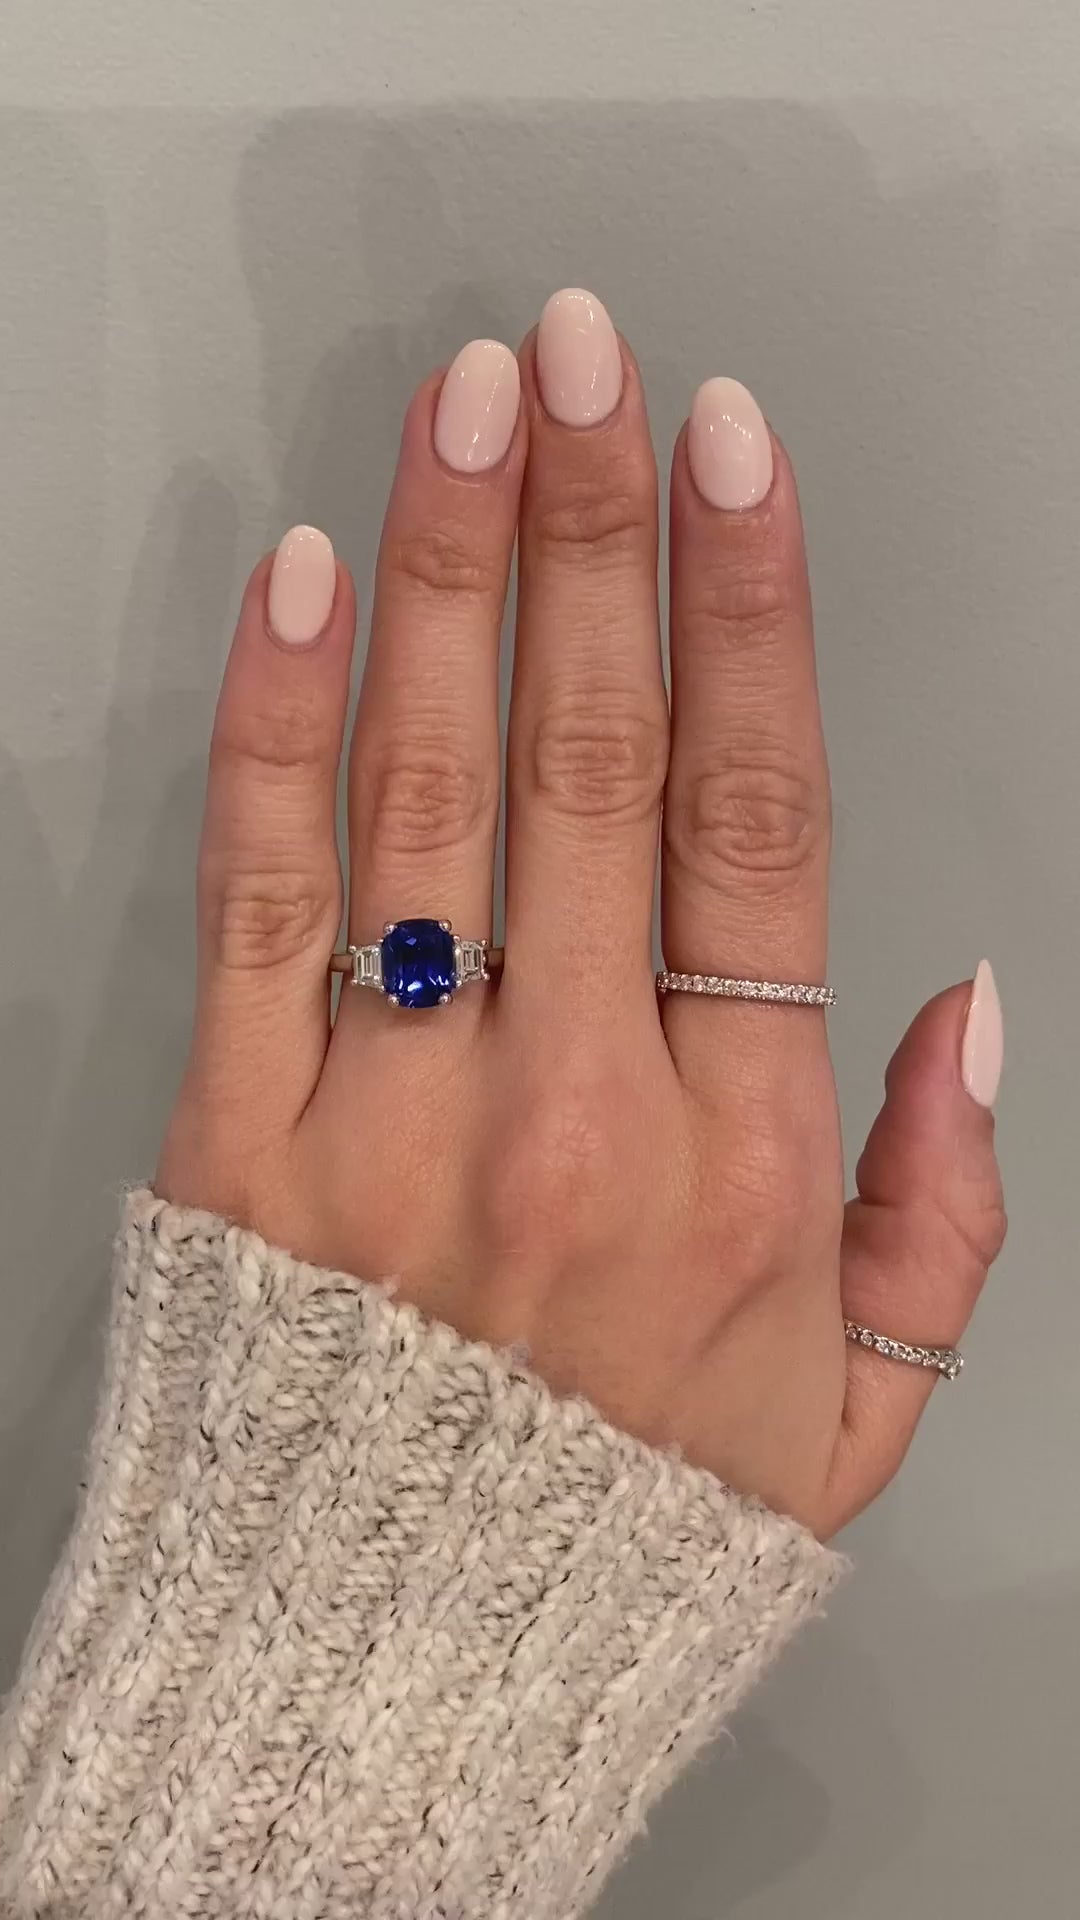 caption:Shown with blue sapphire diamond